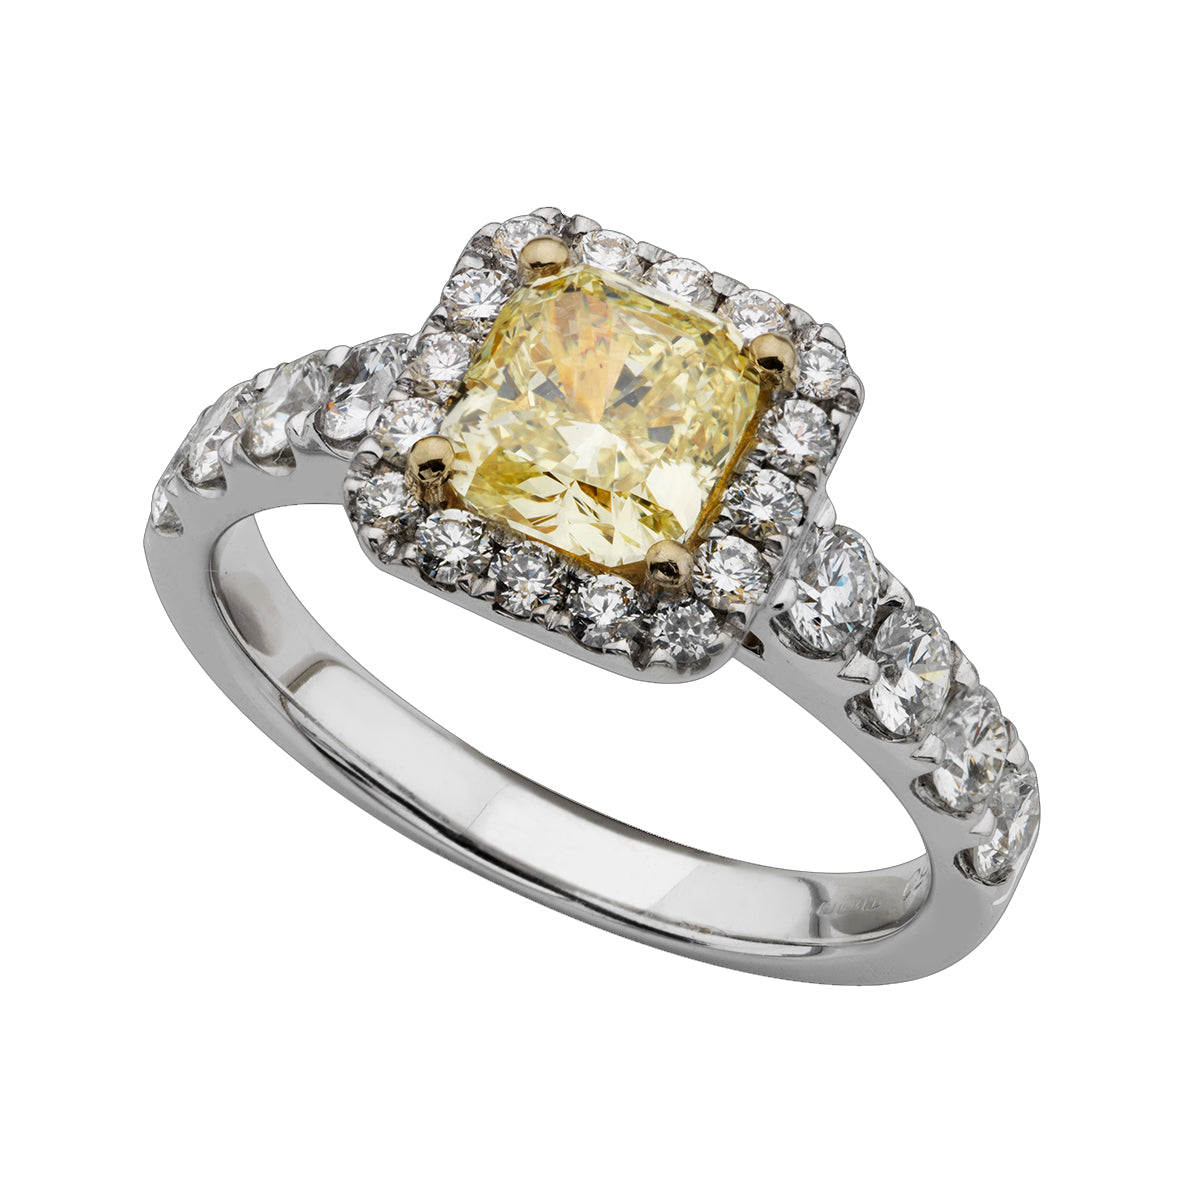 Fancy Yellow Diamond Ring